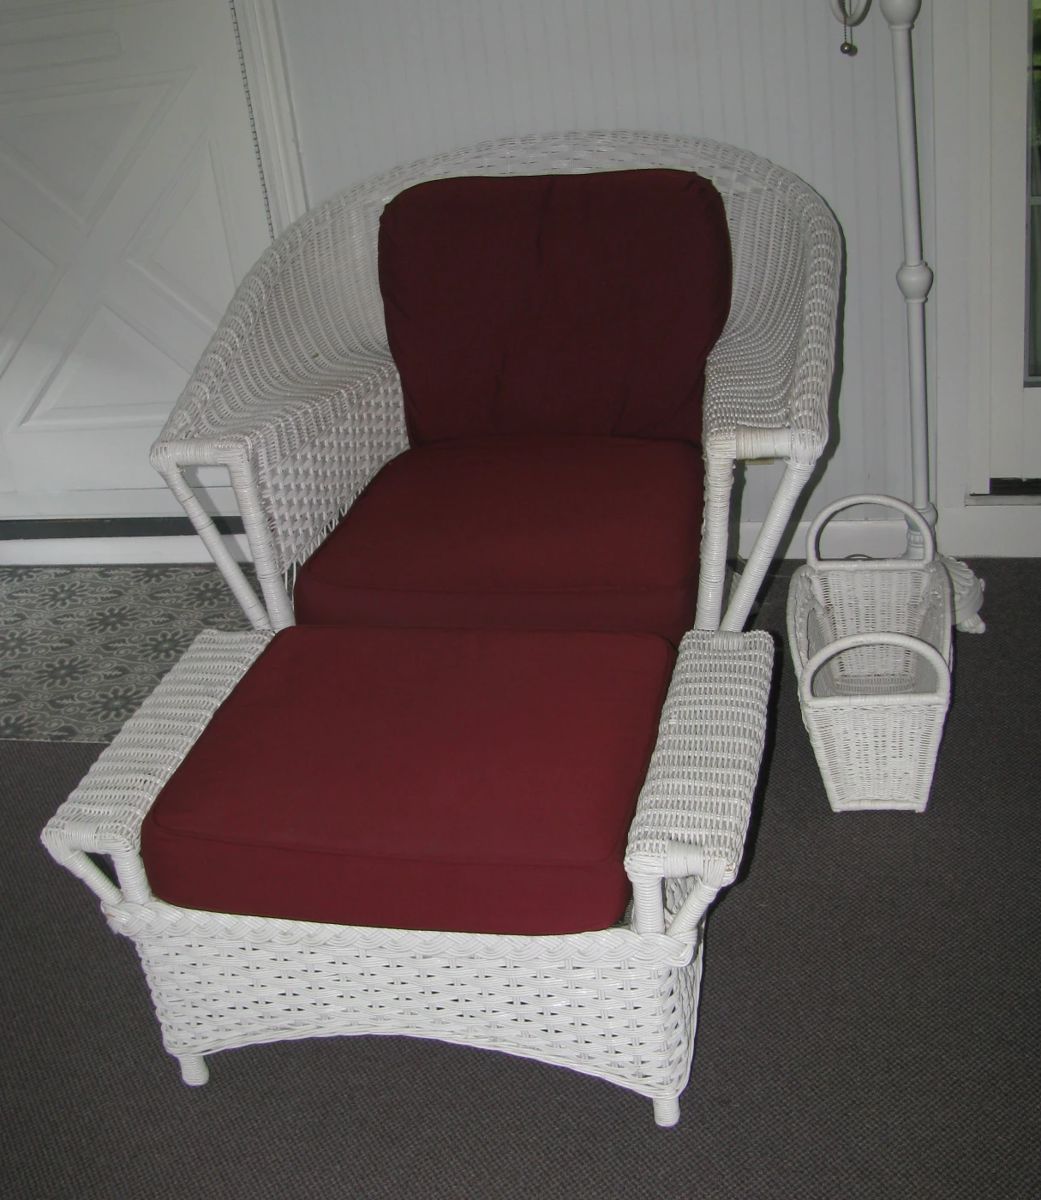 Wicker chair/ottoman